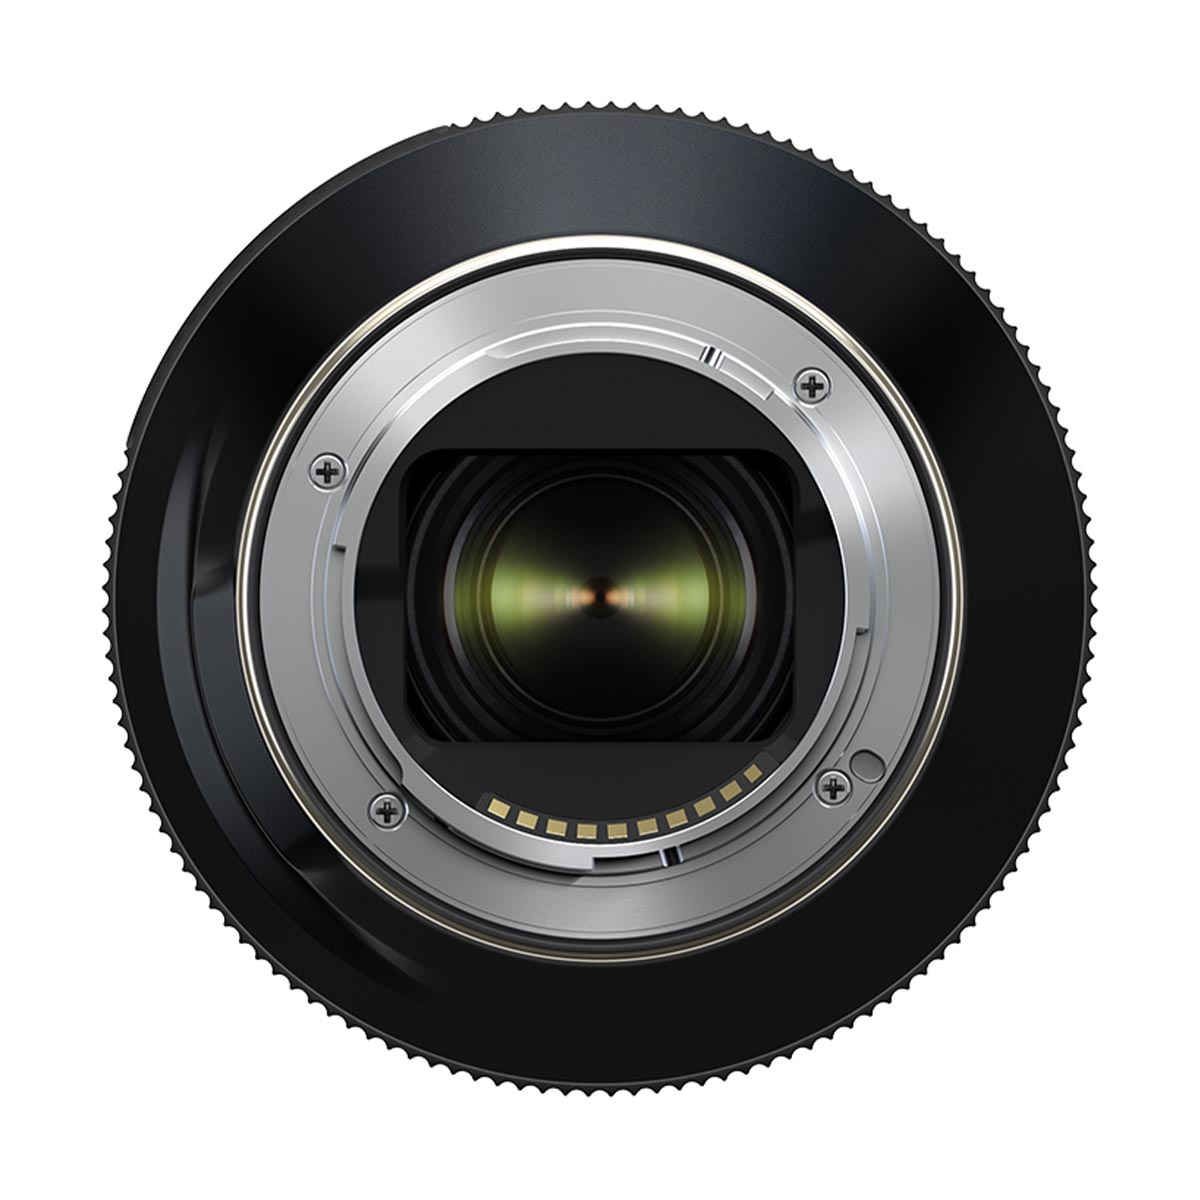 Tamron 35-150mm f/2-2.8 Di III VXD Lens for Sony FE *OPEN BOX*